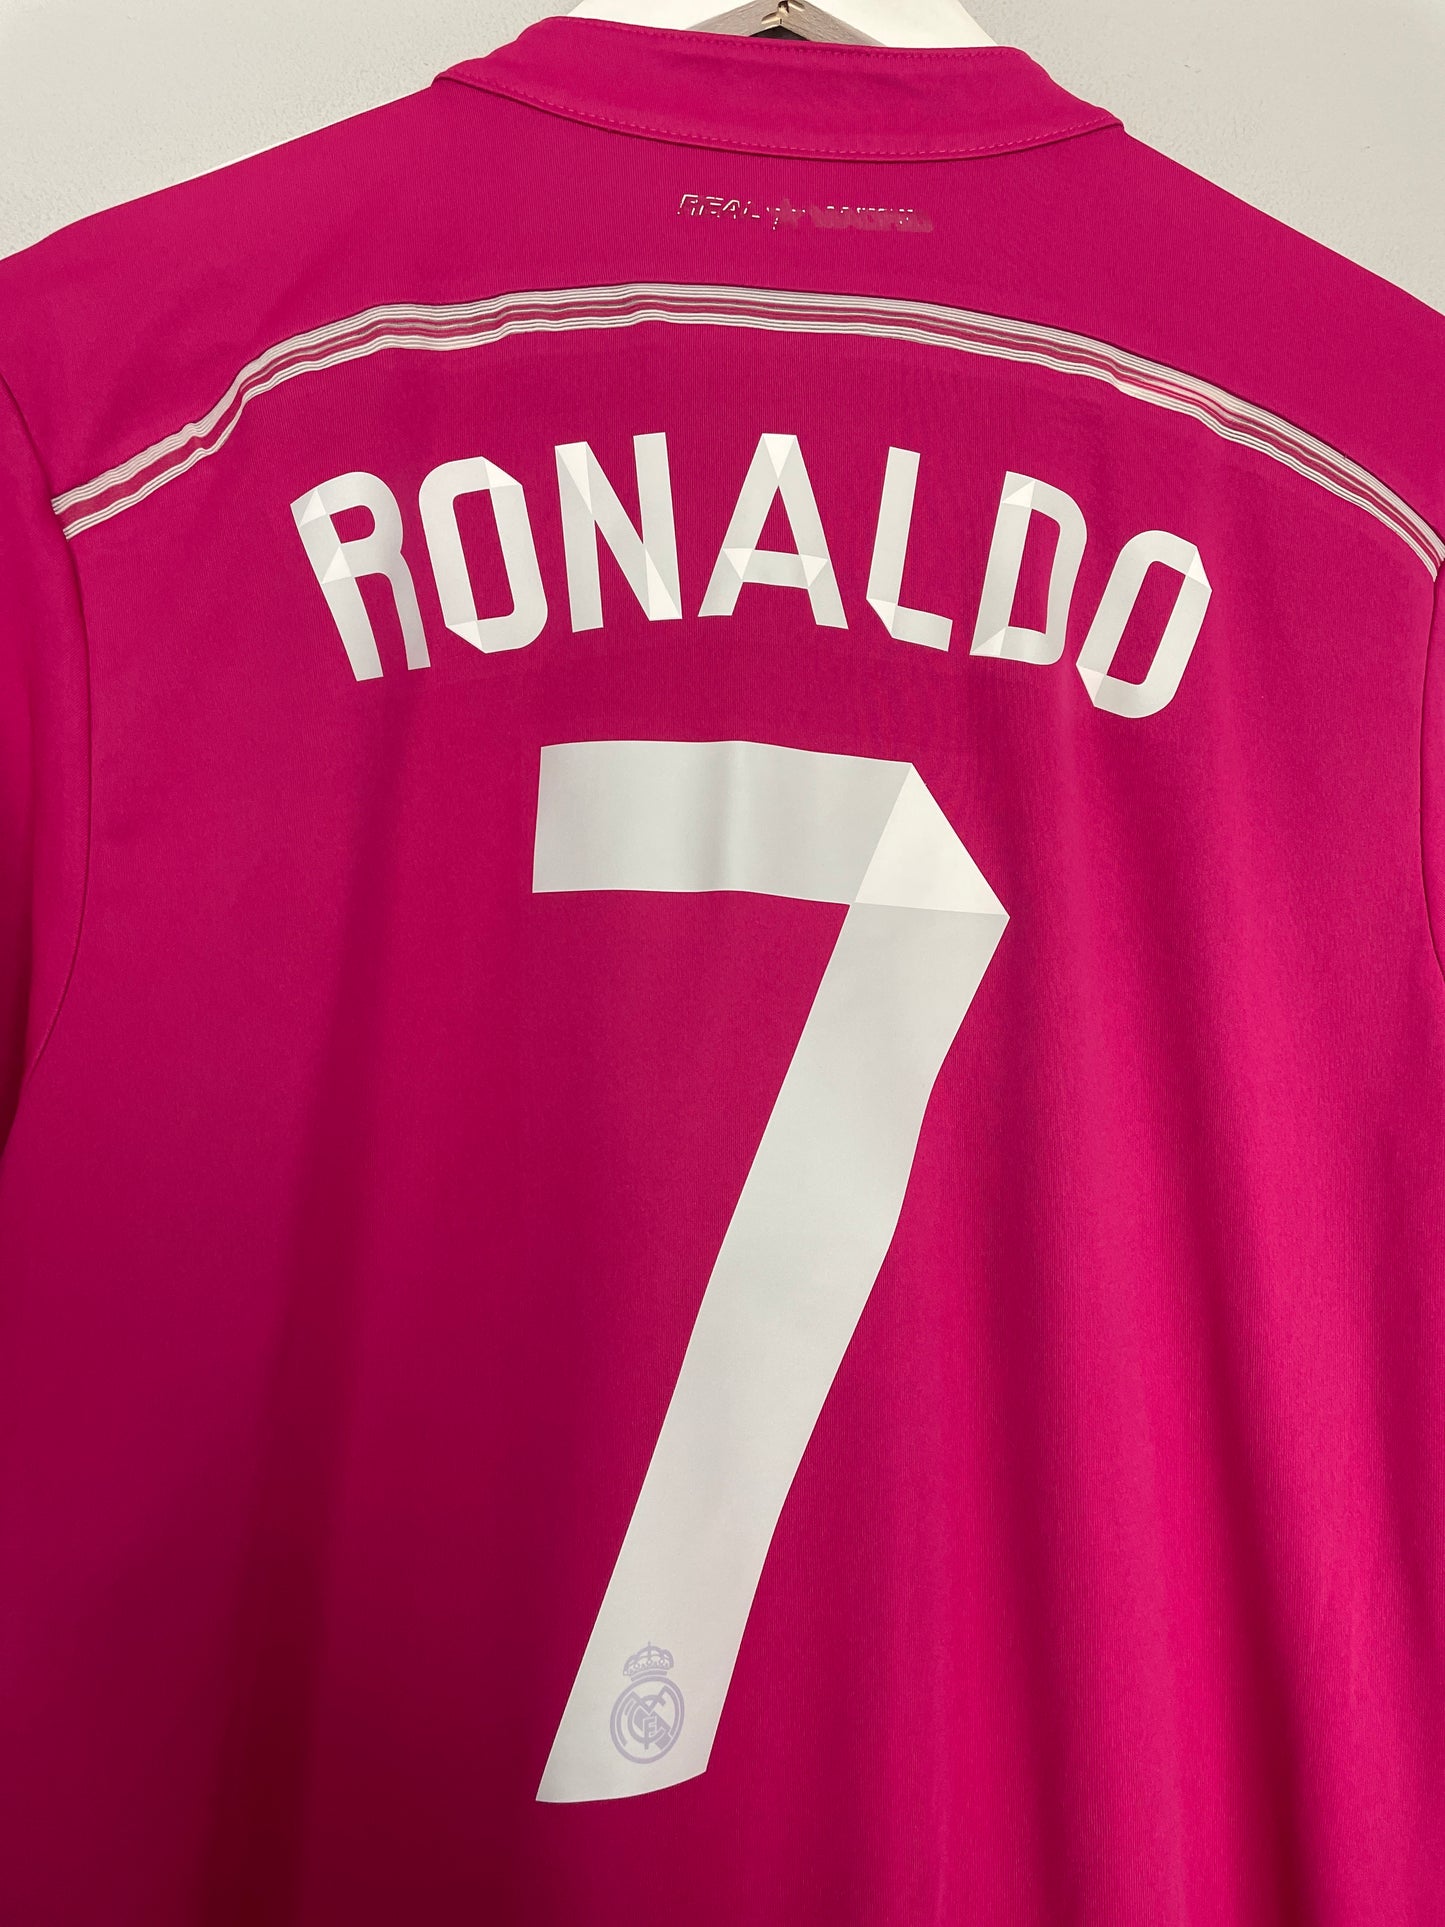 2014/15 REAL MADRID RONALDO #7 AWAY SHIRT (M) ADIDAS